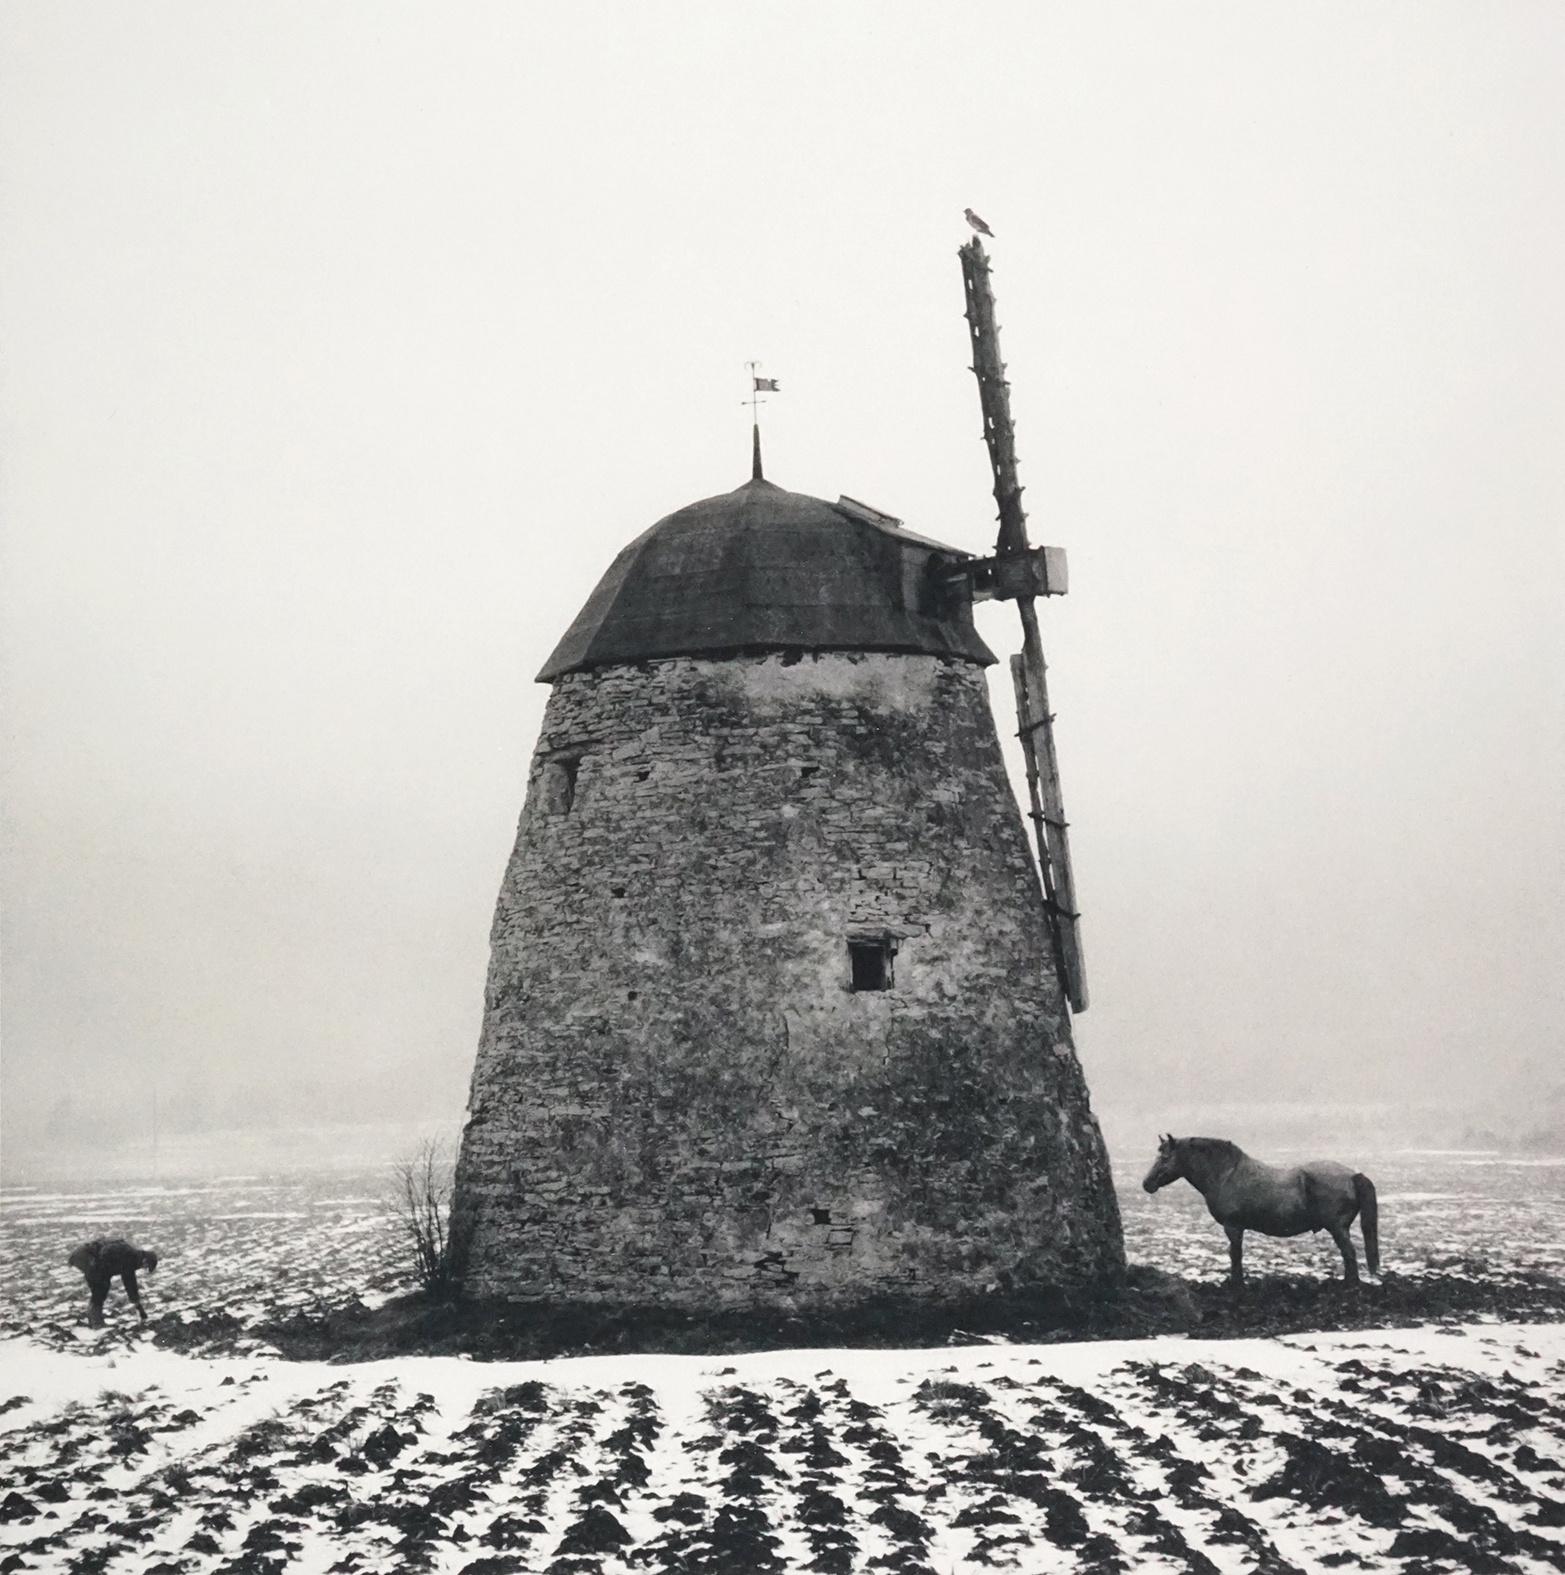 Pentti Sammallahti Black and White Photograph - Gotland, Sweden (Horse & Windmill), 1993/ Printed Later